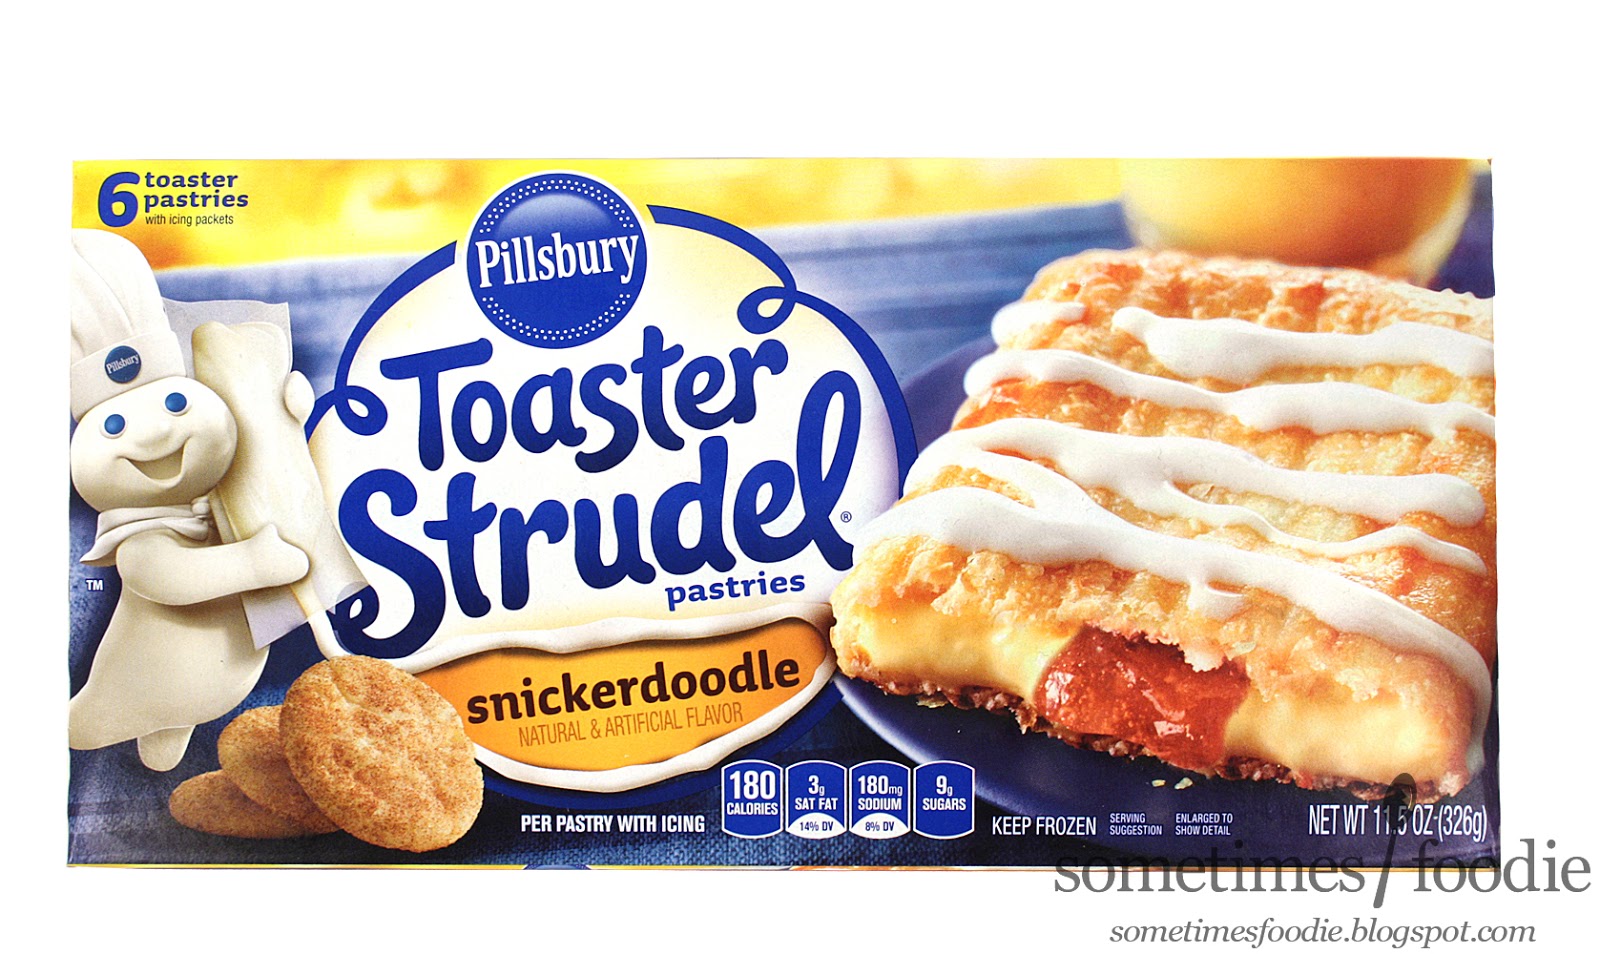 Snickerdoodle Toaster Strudel - ShopRite: Berlin, NJ.